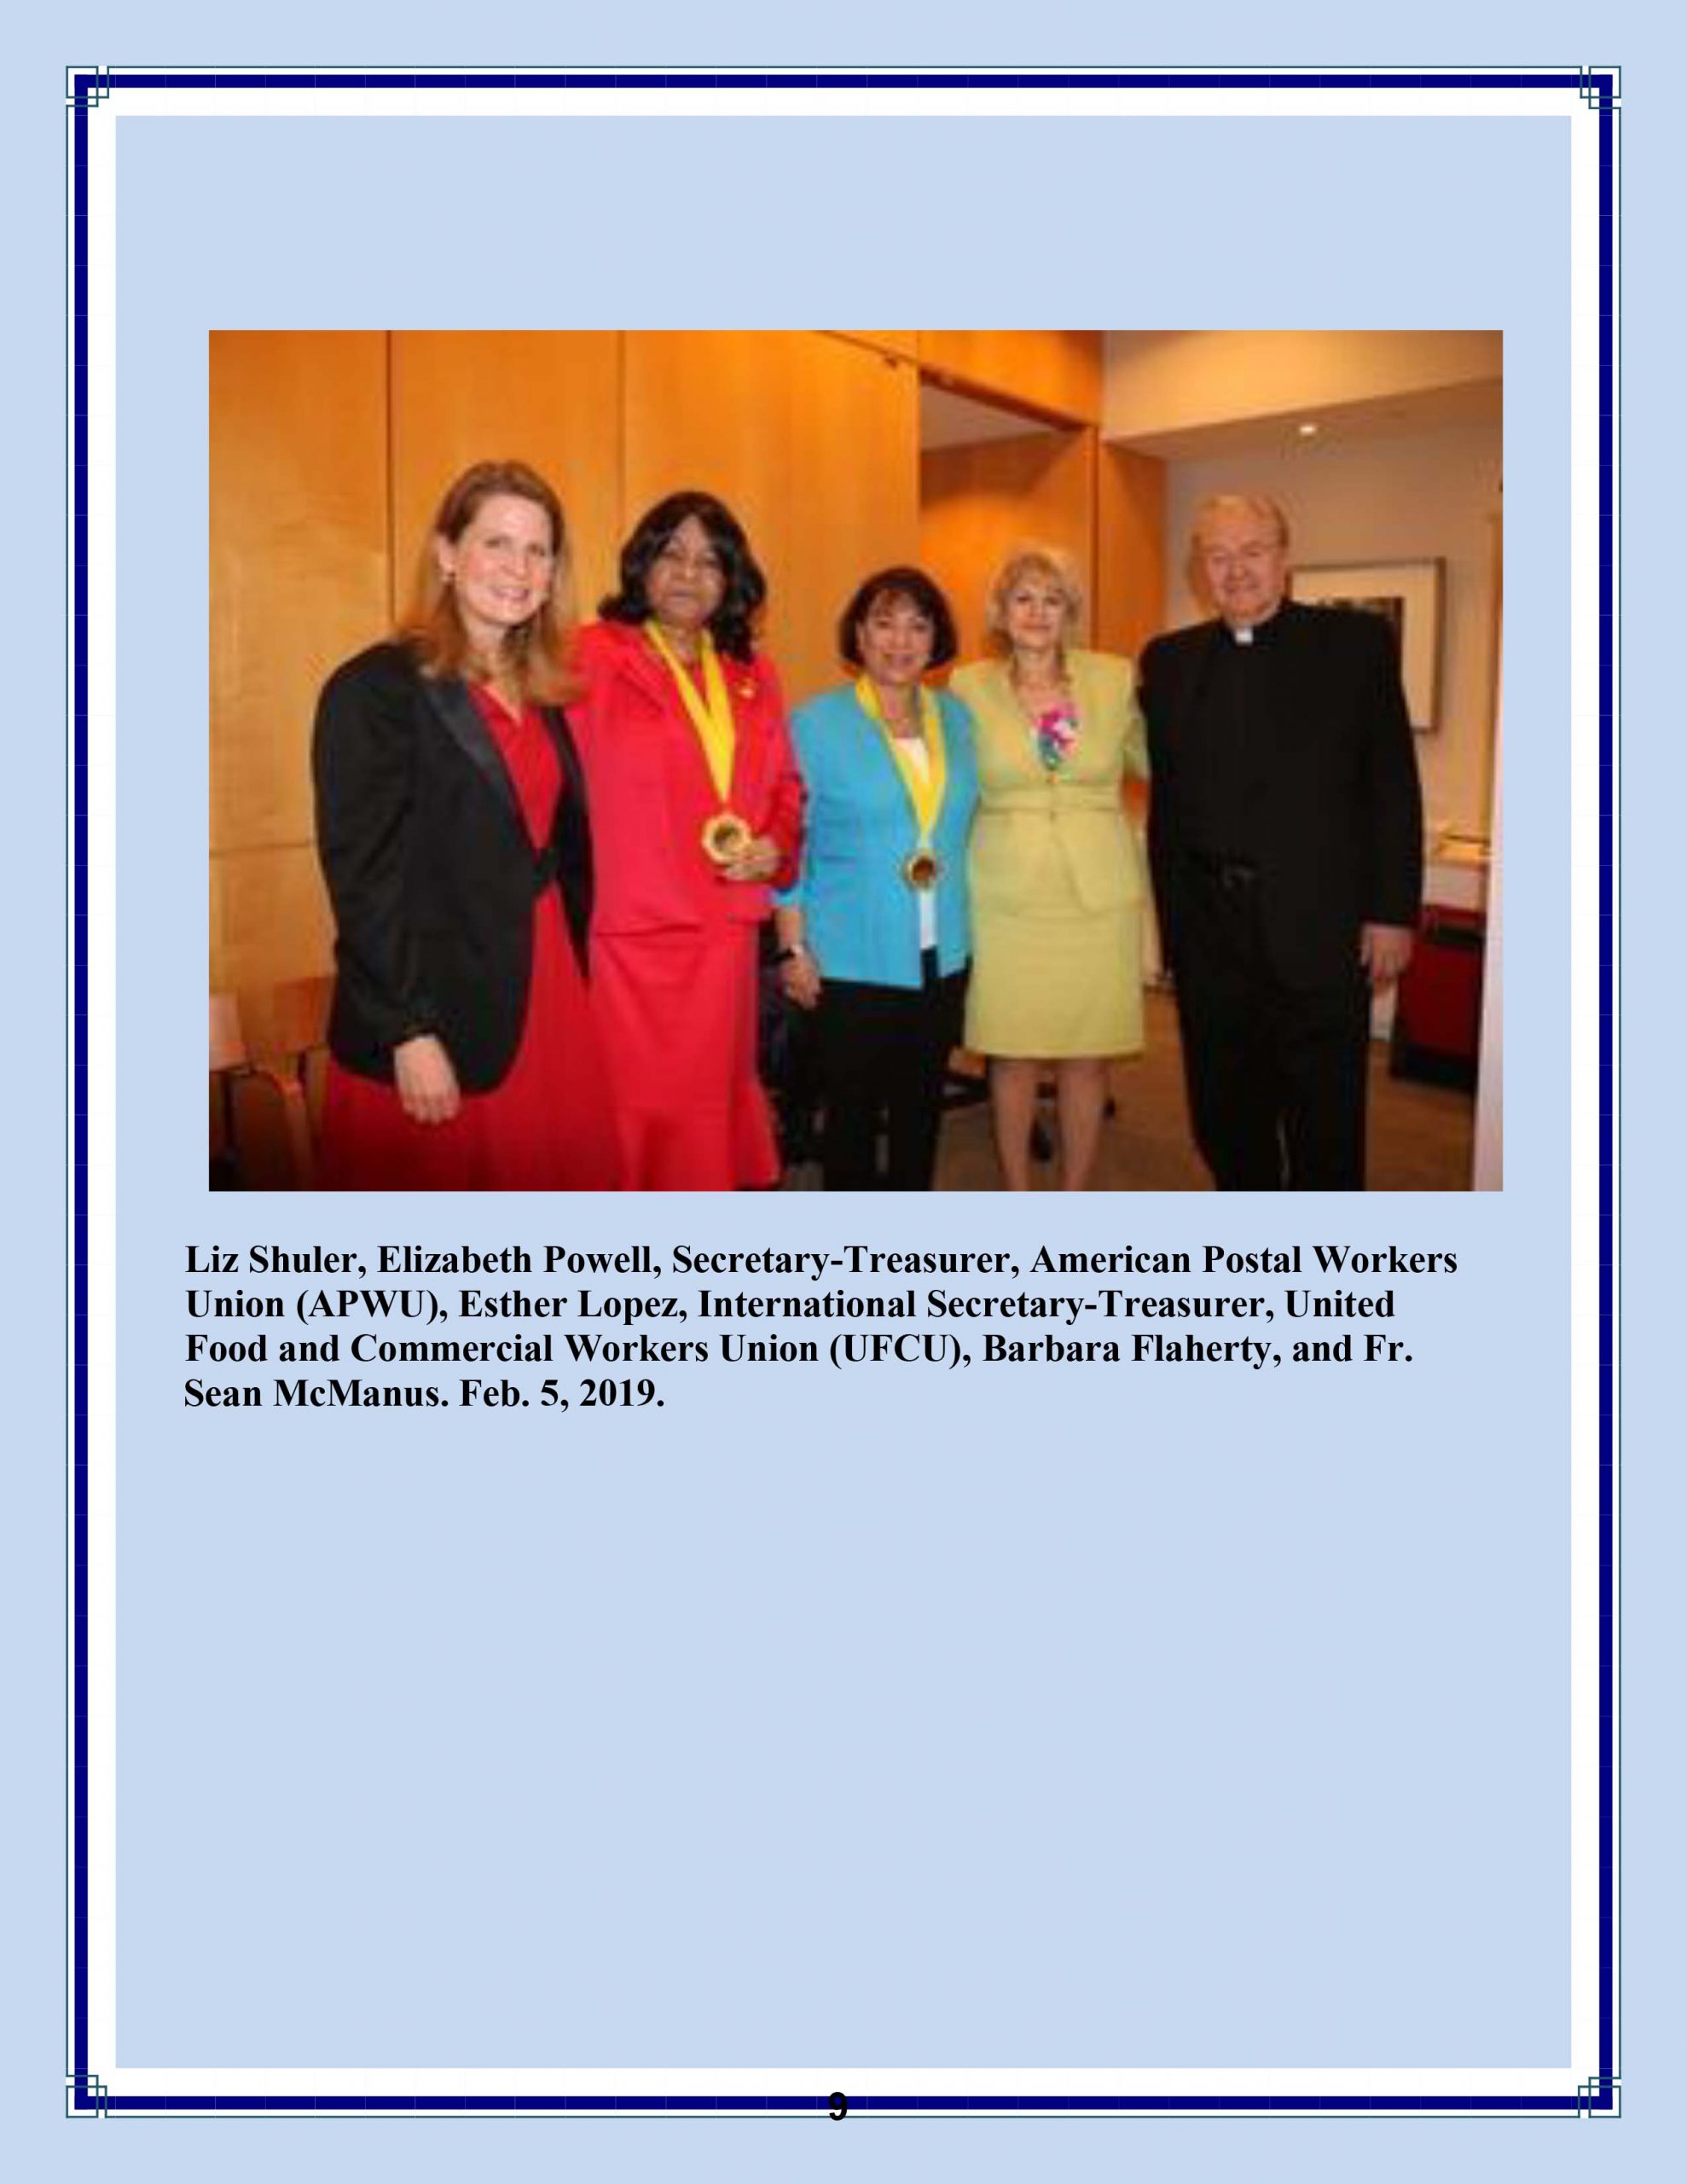 Liz Shuler, Elizabeth Powell, Esther Lopez, Barbara Flaherty, and Fr. Sean McManus